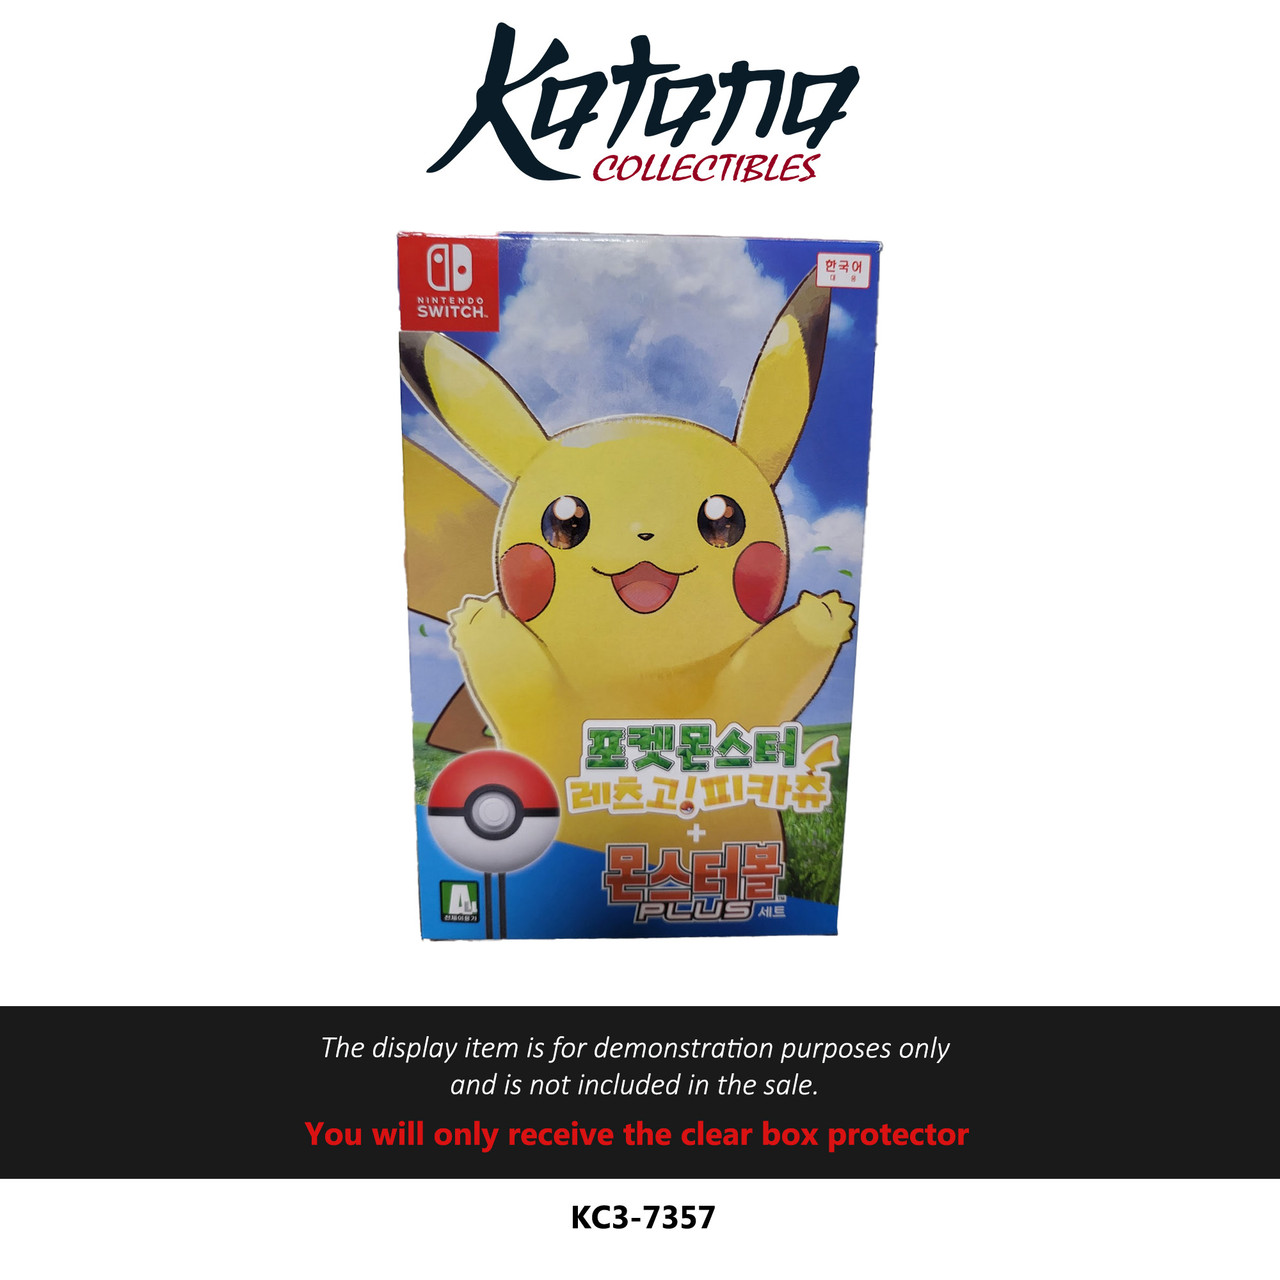 Katana Collectibles Protector For Nintendo Switch Pokemon Pikachu (Kor Ver)